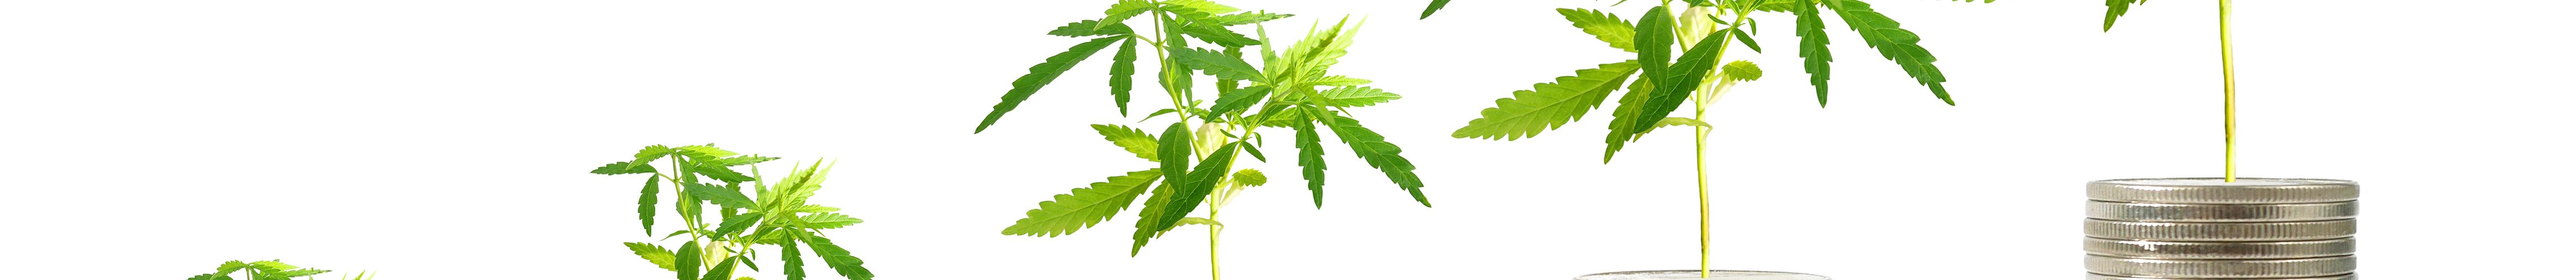 investment cannabis hemp